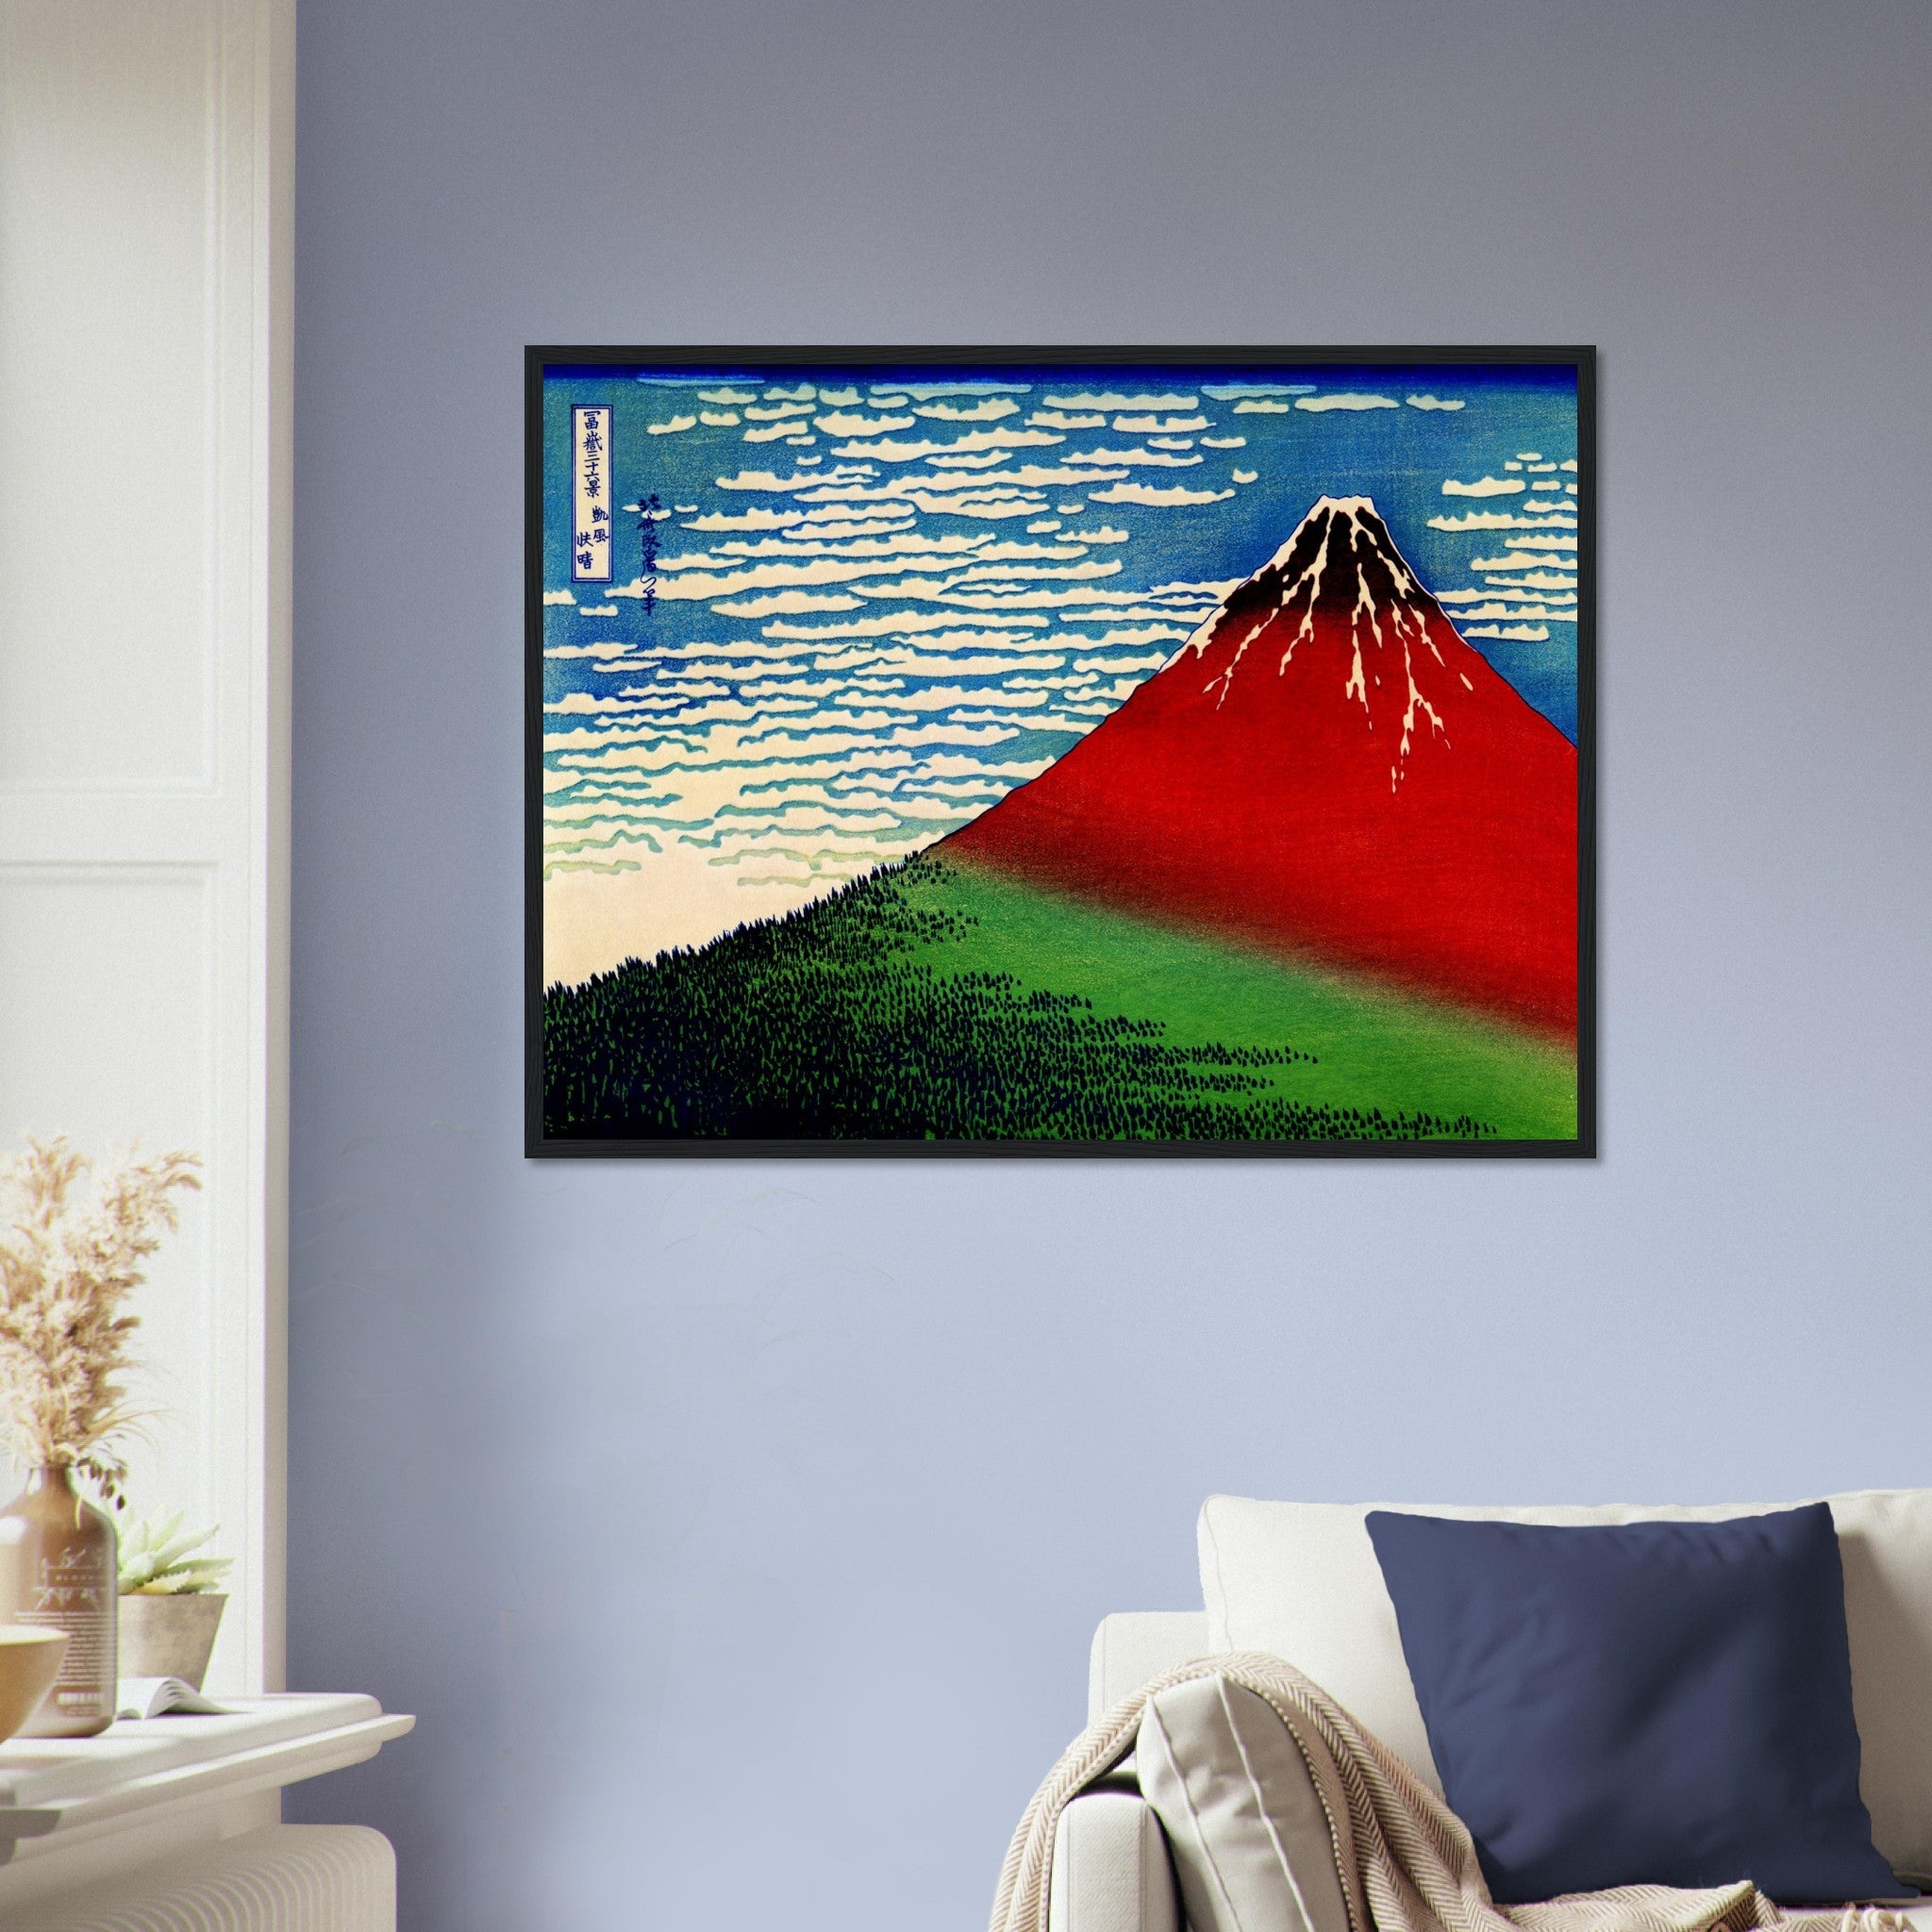 Mount Fuji Framed Print, Katsushika Hokusai 1833 - Mount Fuji Framed - Red Fuji Framed Print - WallArtPrints4U